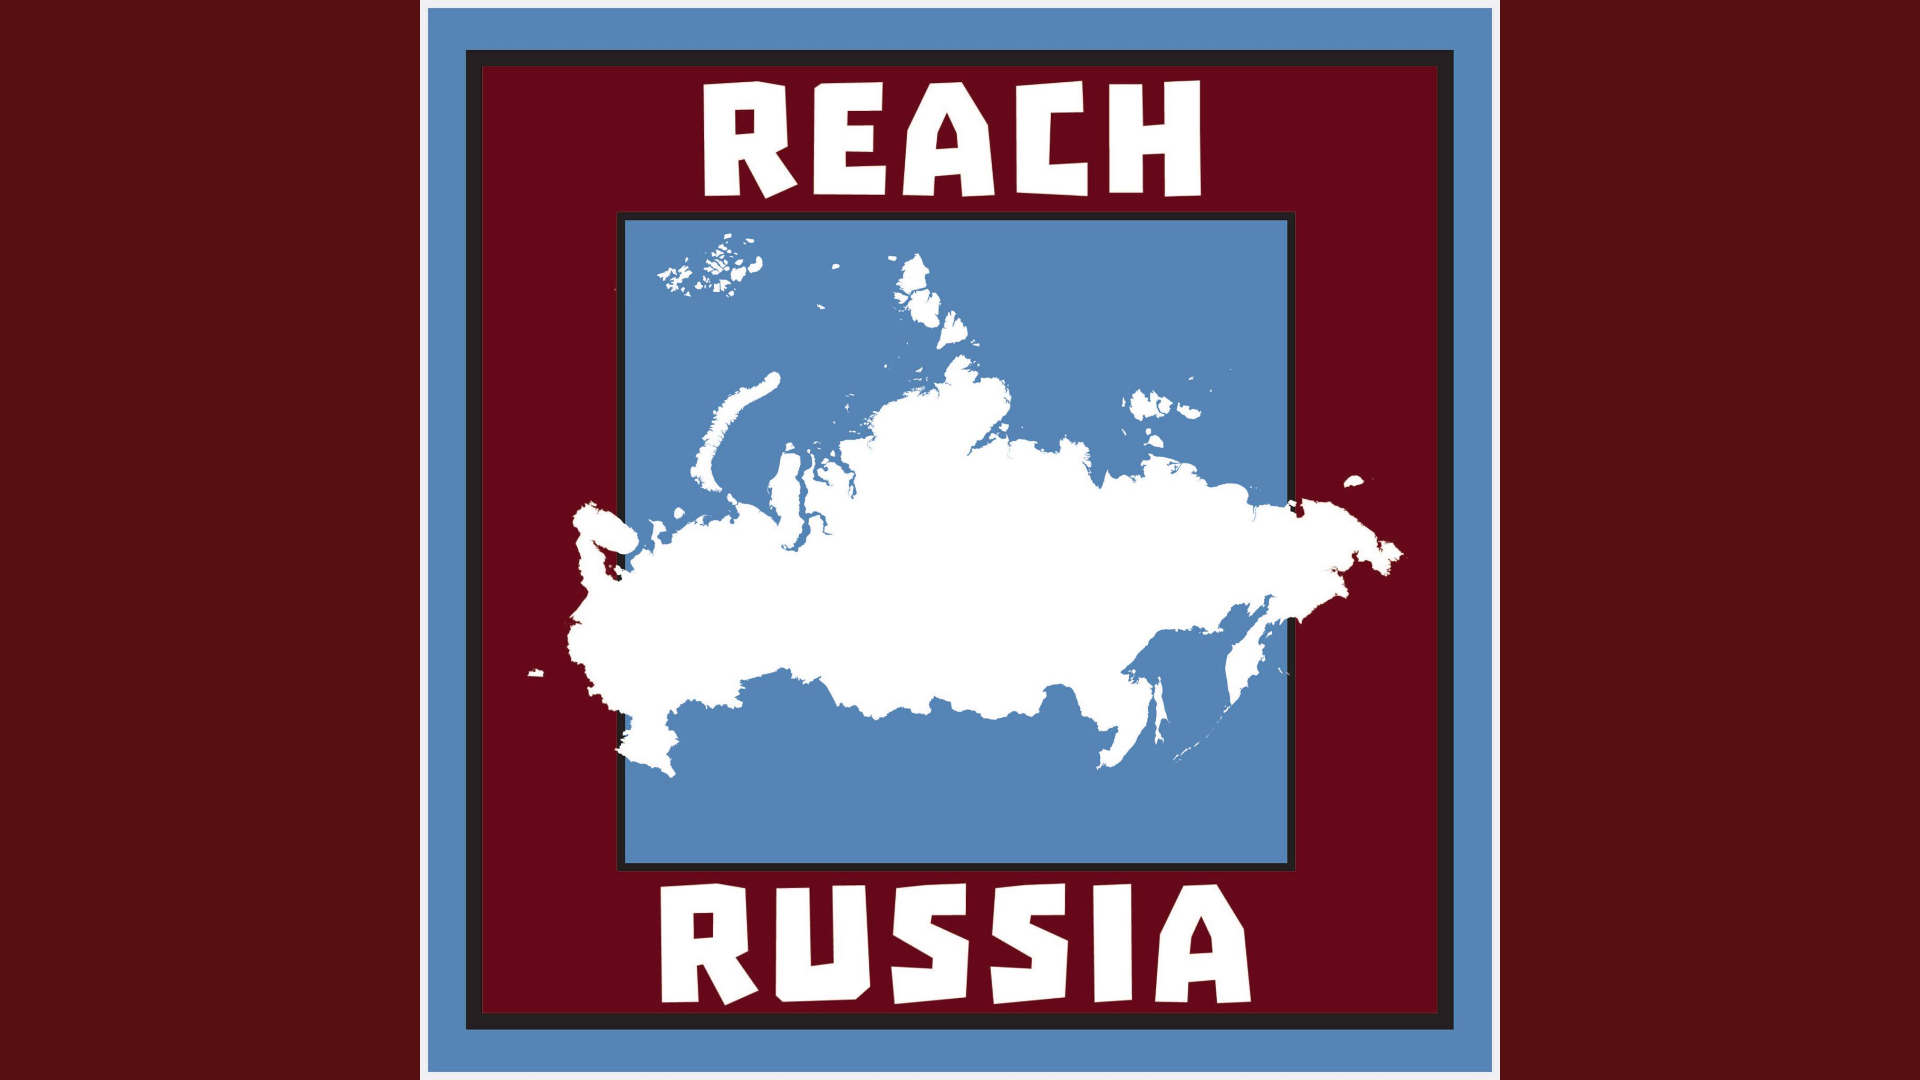 Reach Russia - Steve Cecil